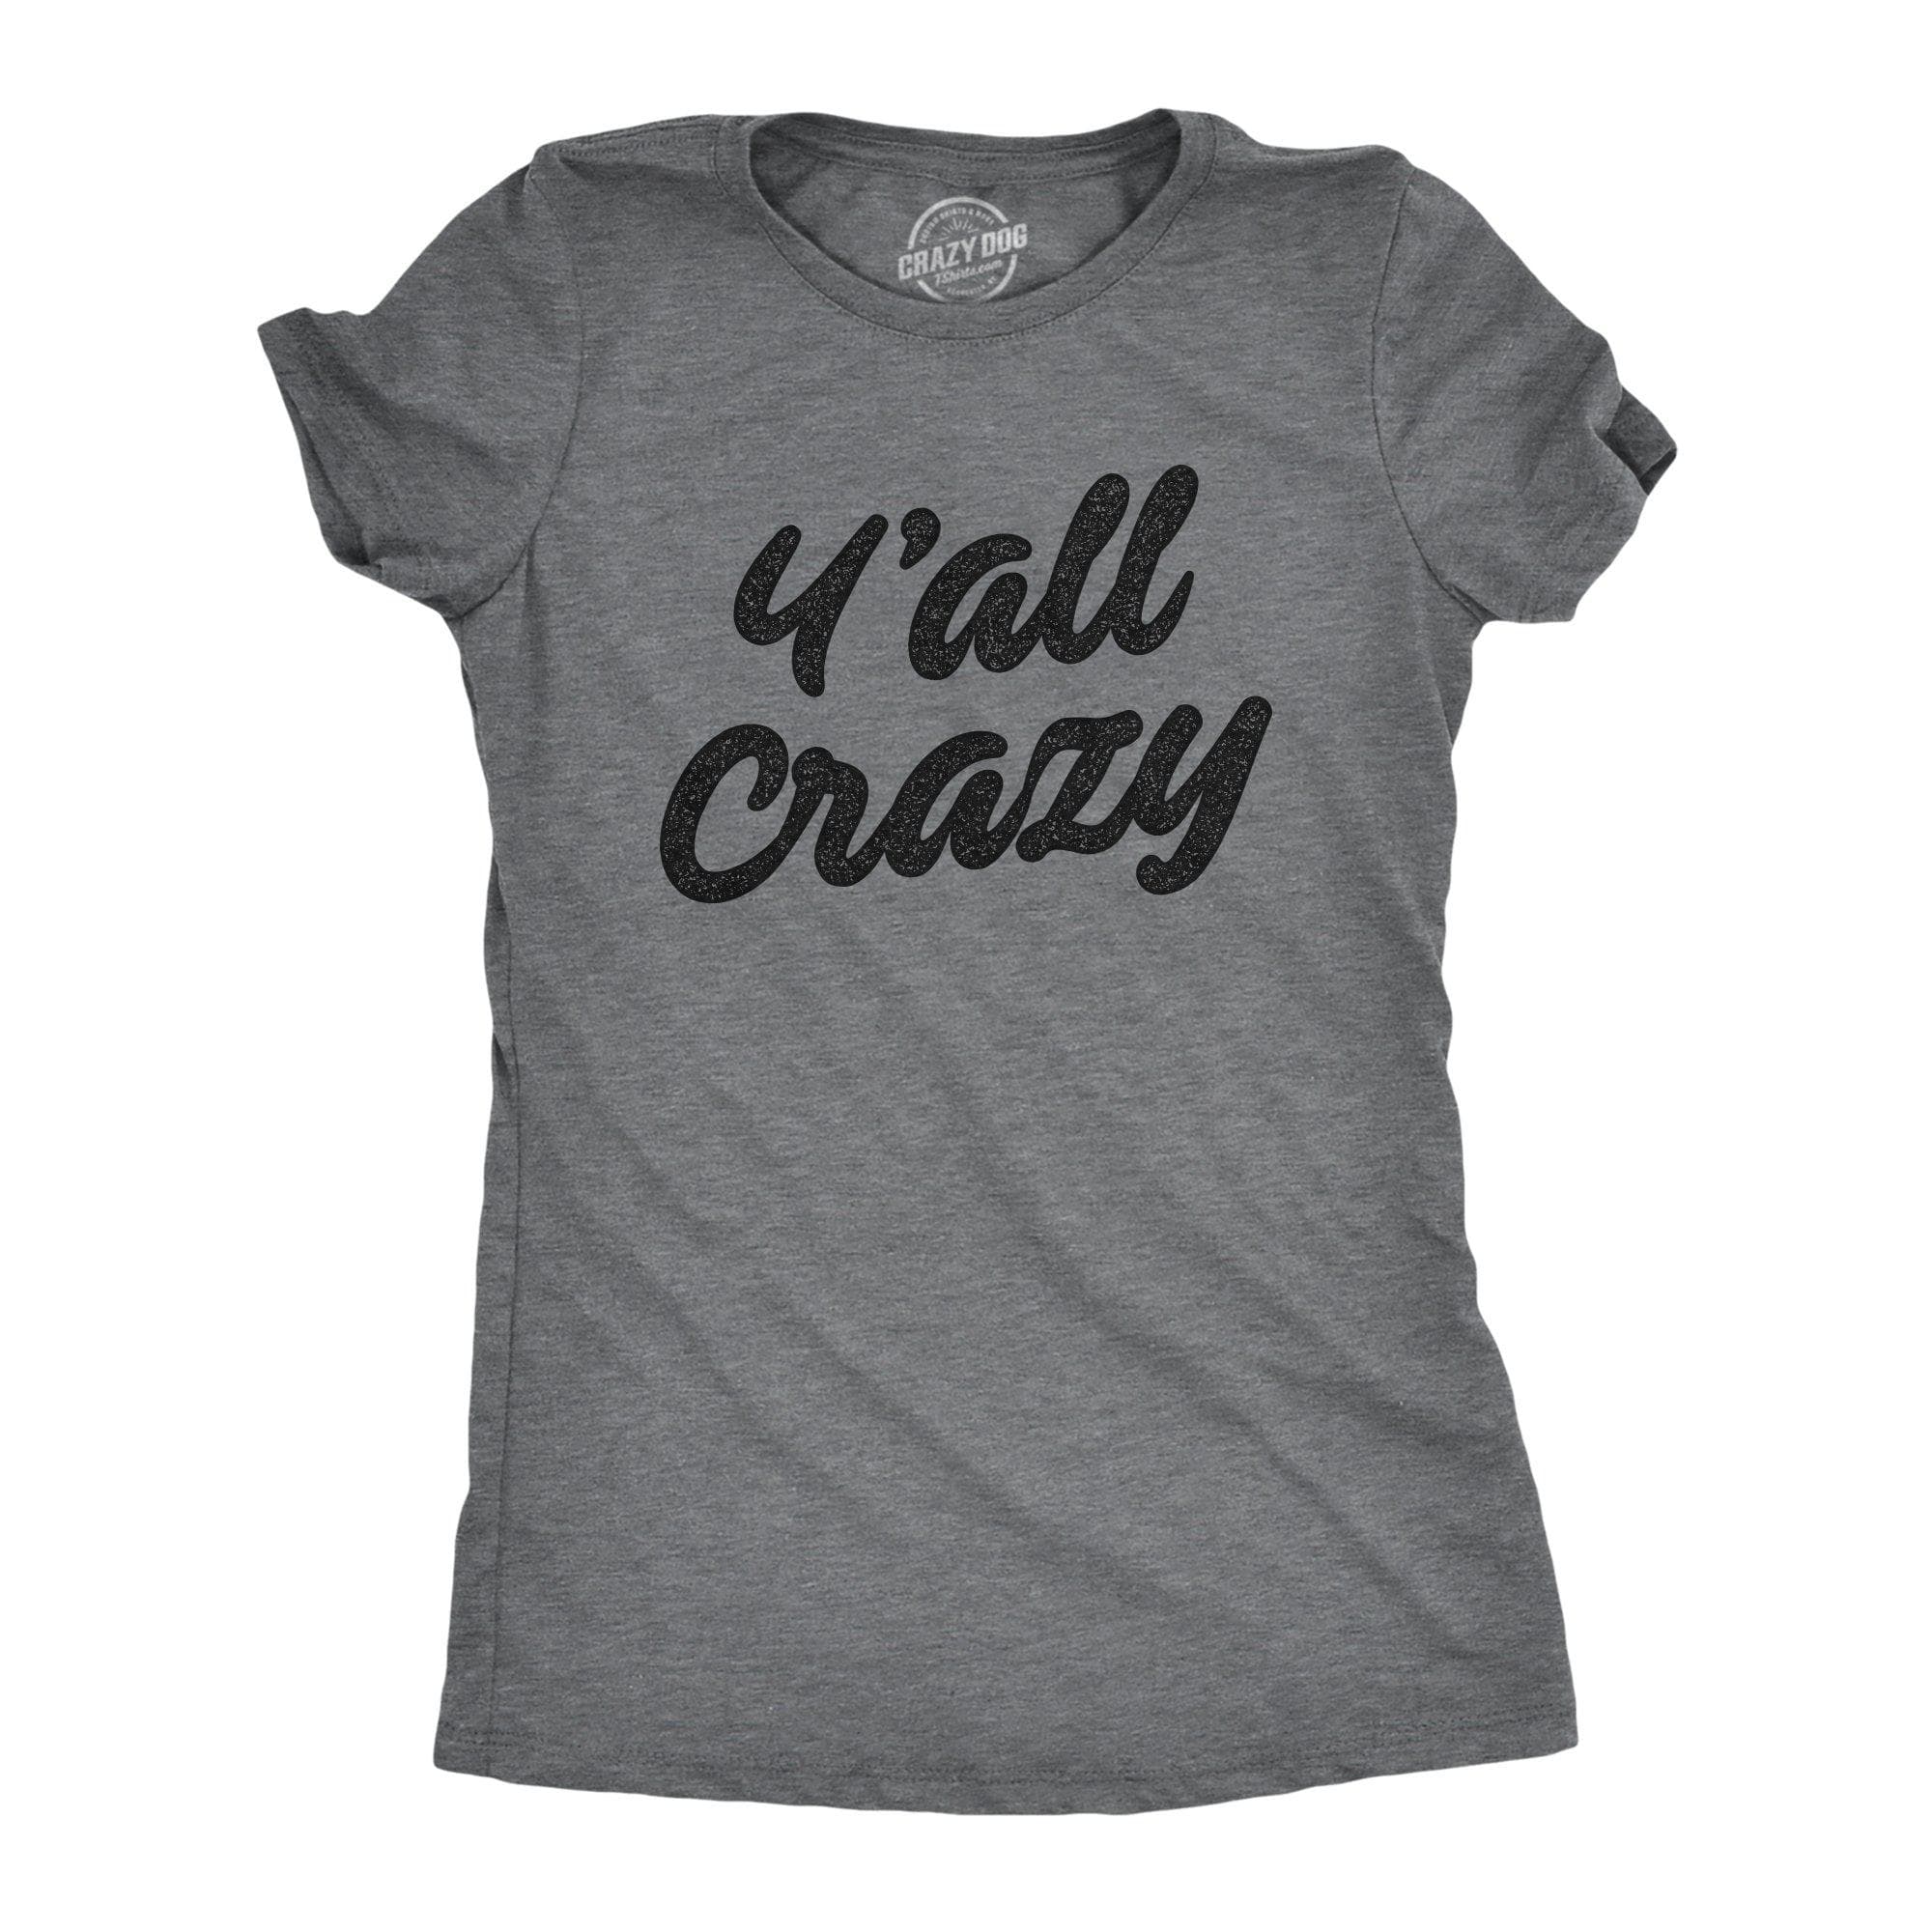 Y'all Crazy Women's Tshirt - Crazy Dog T-Shirts